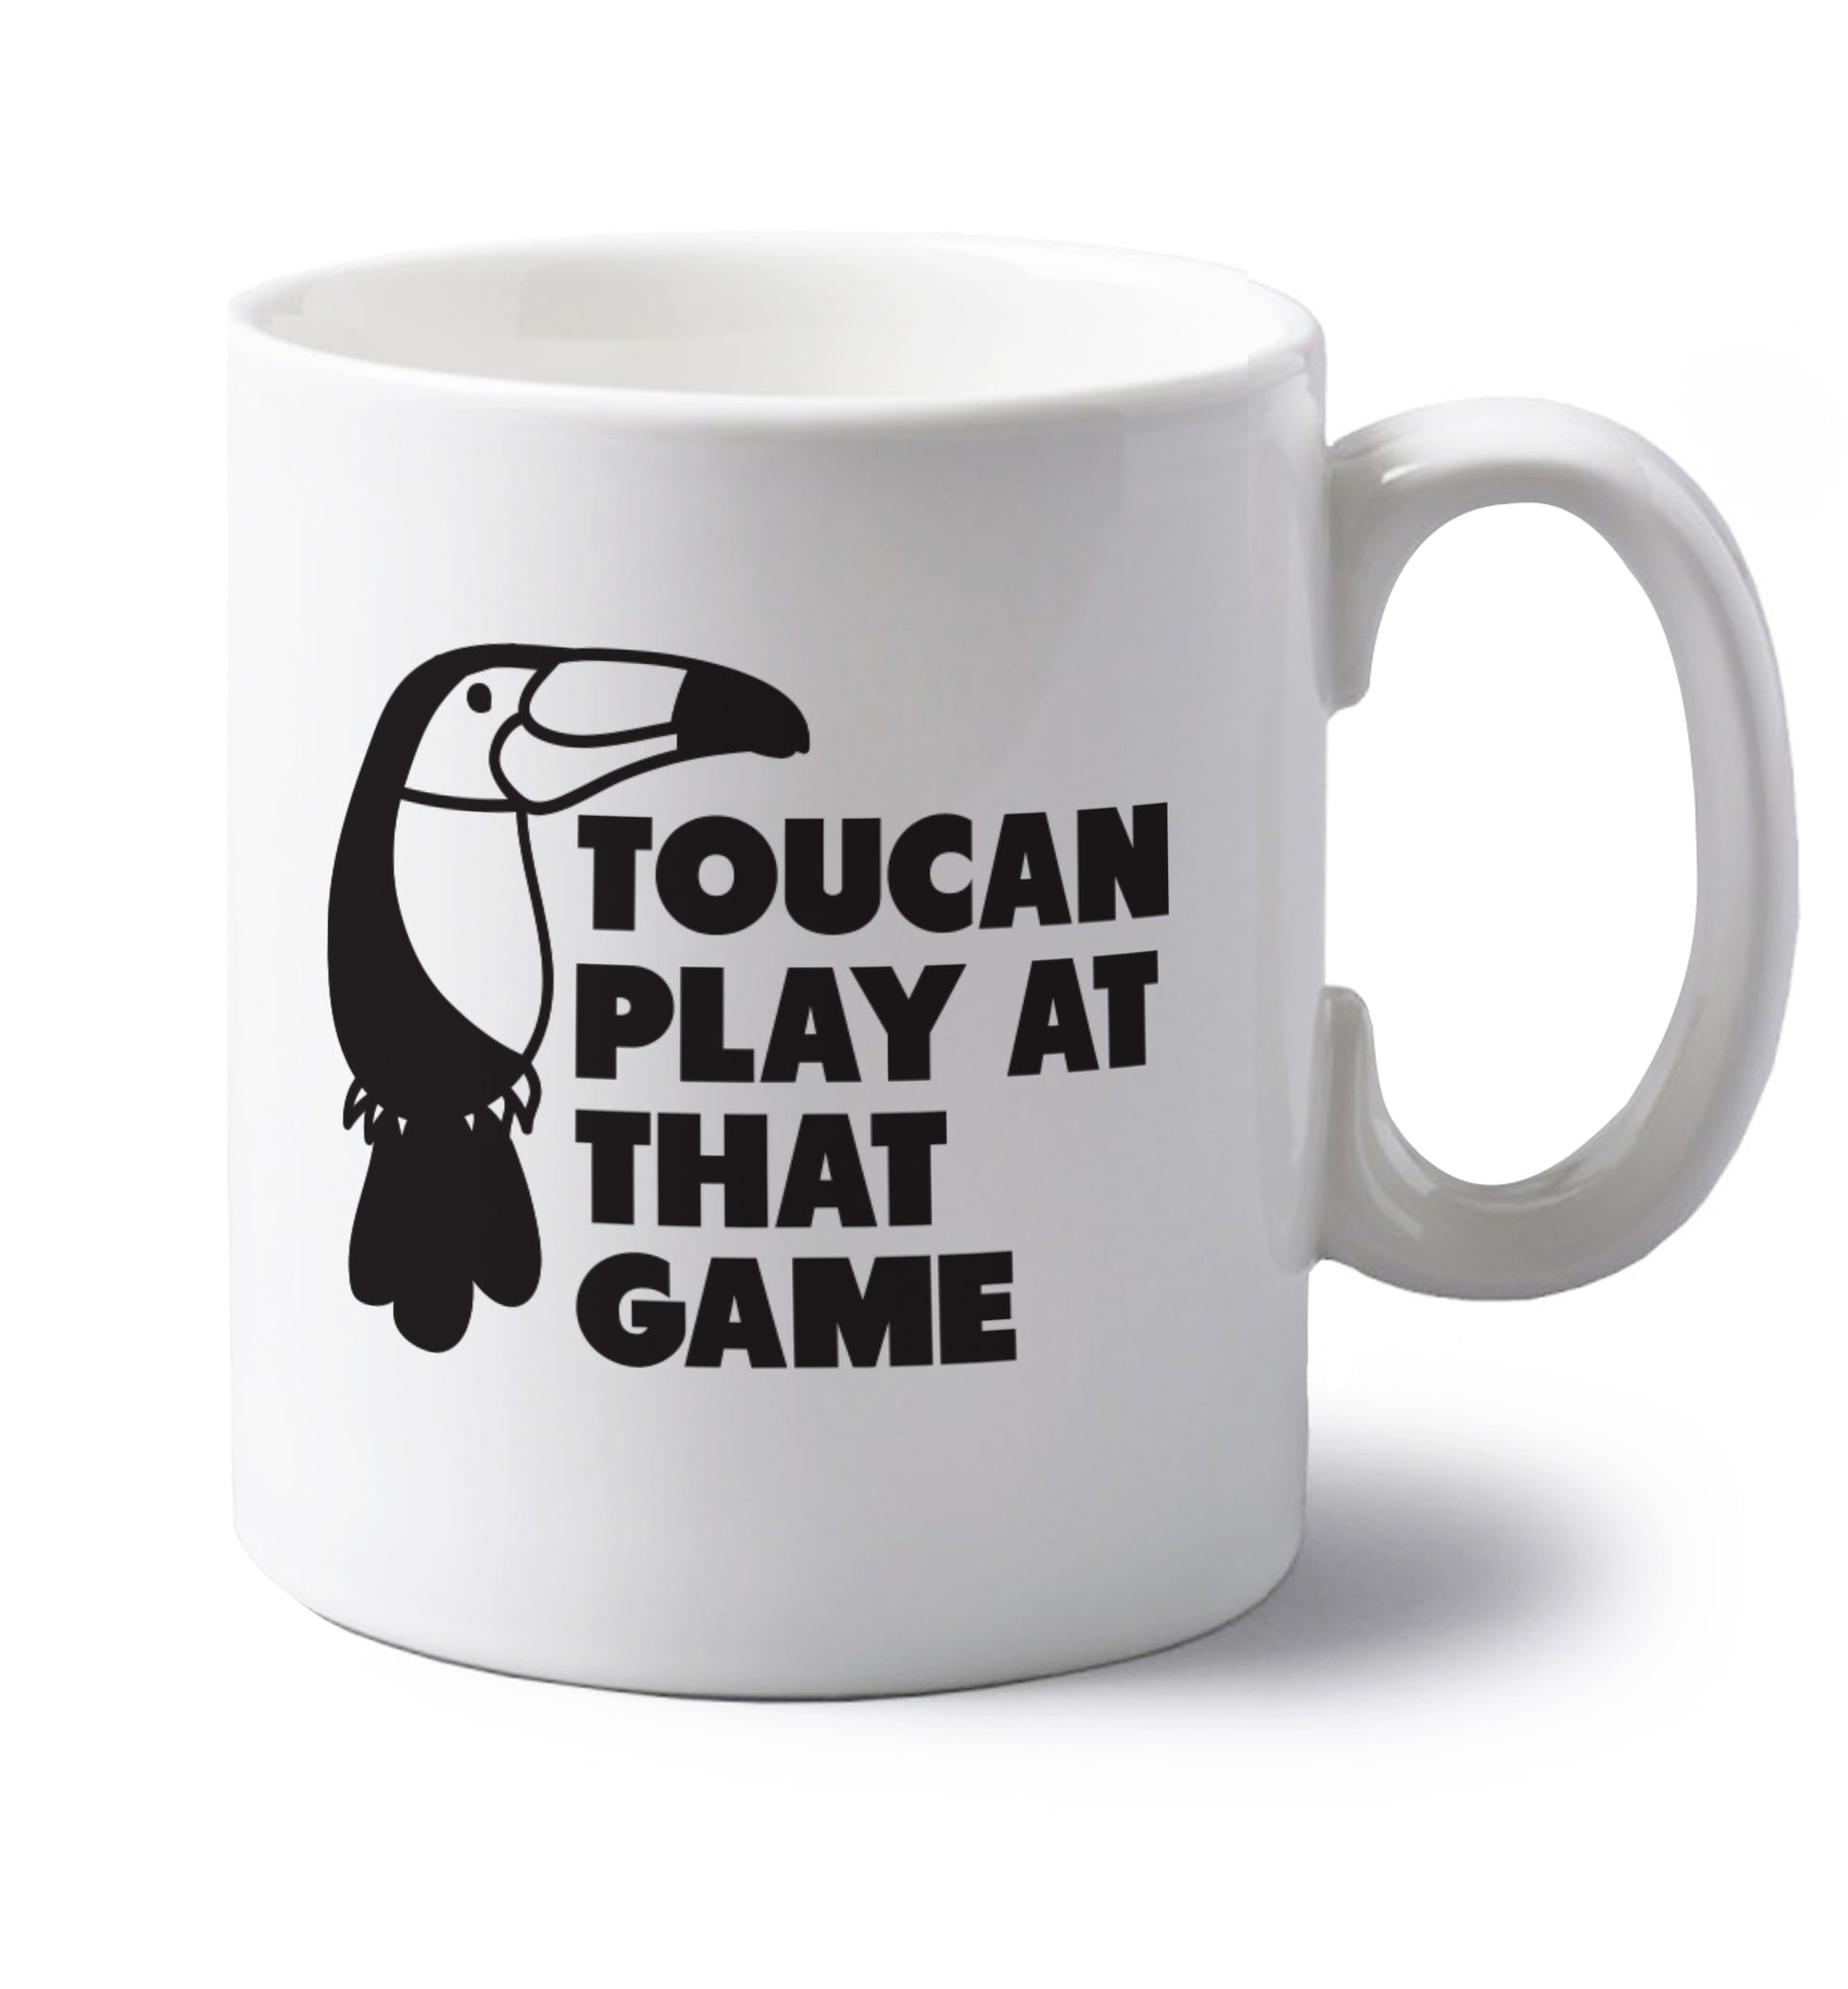 Toucan play at that game left handed white ceramic mug 